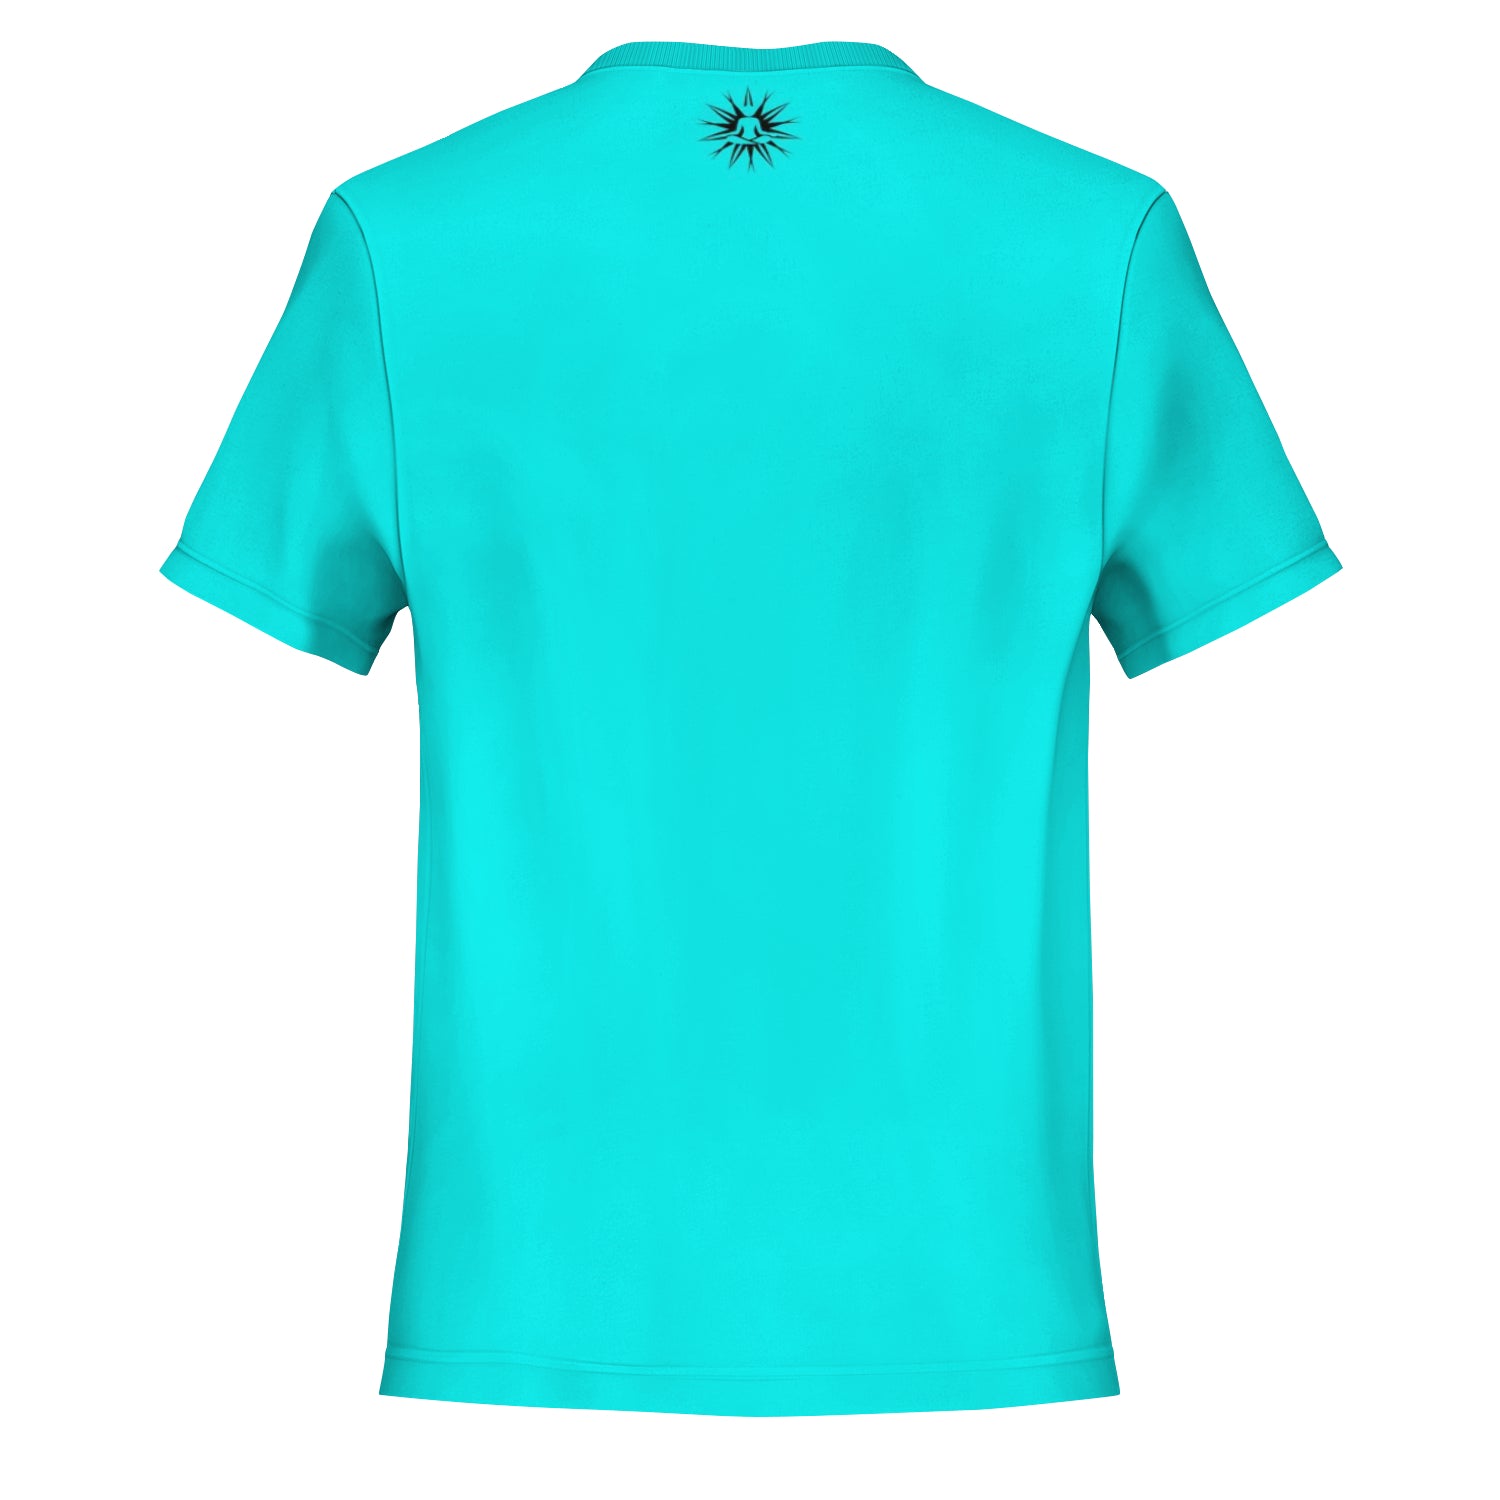 ARDA T-shirt - Turquoise